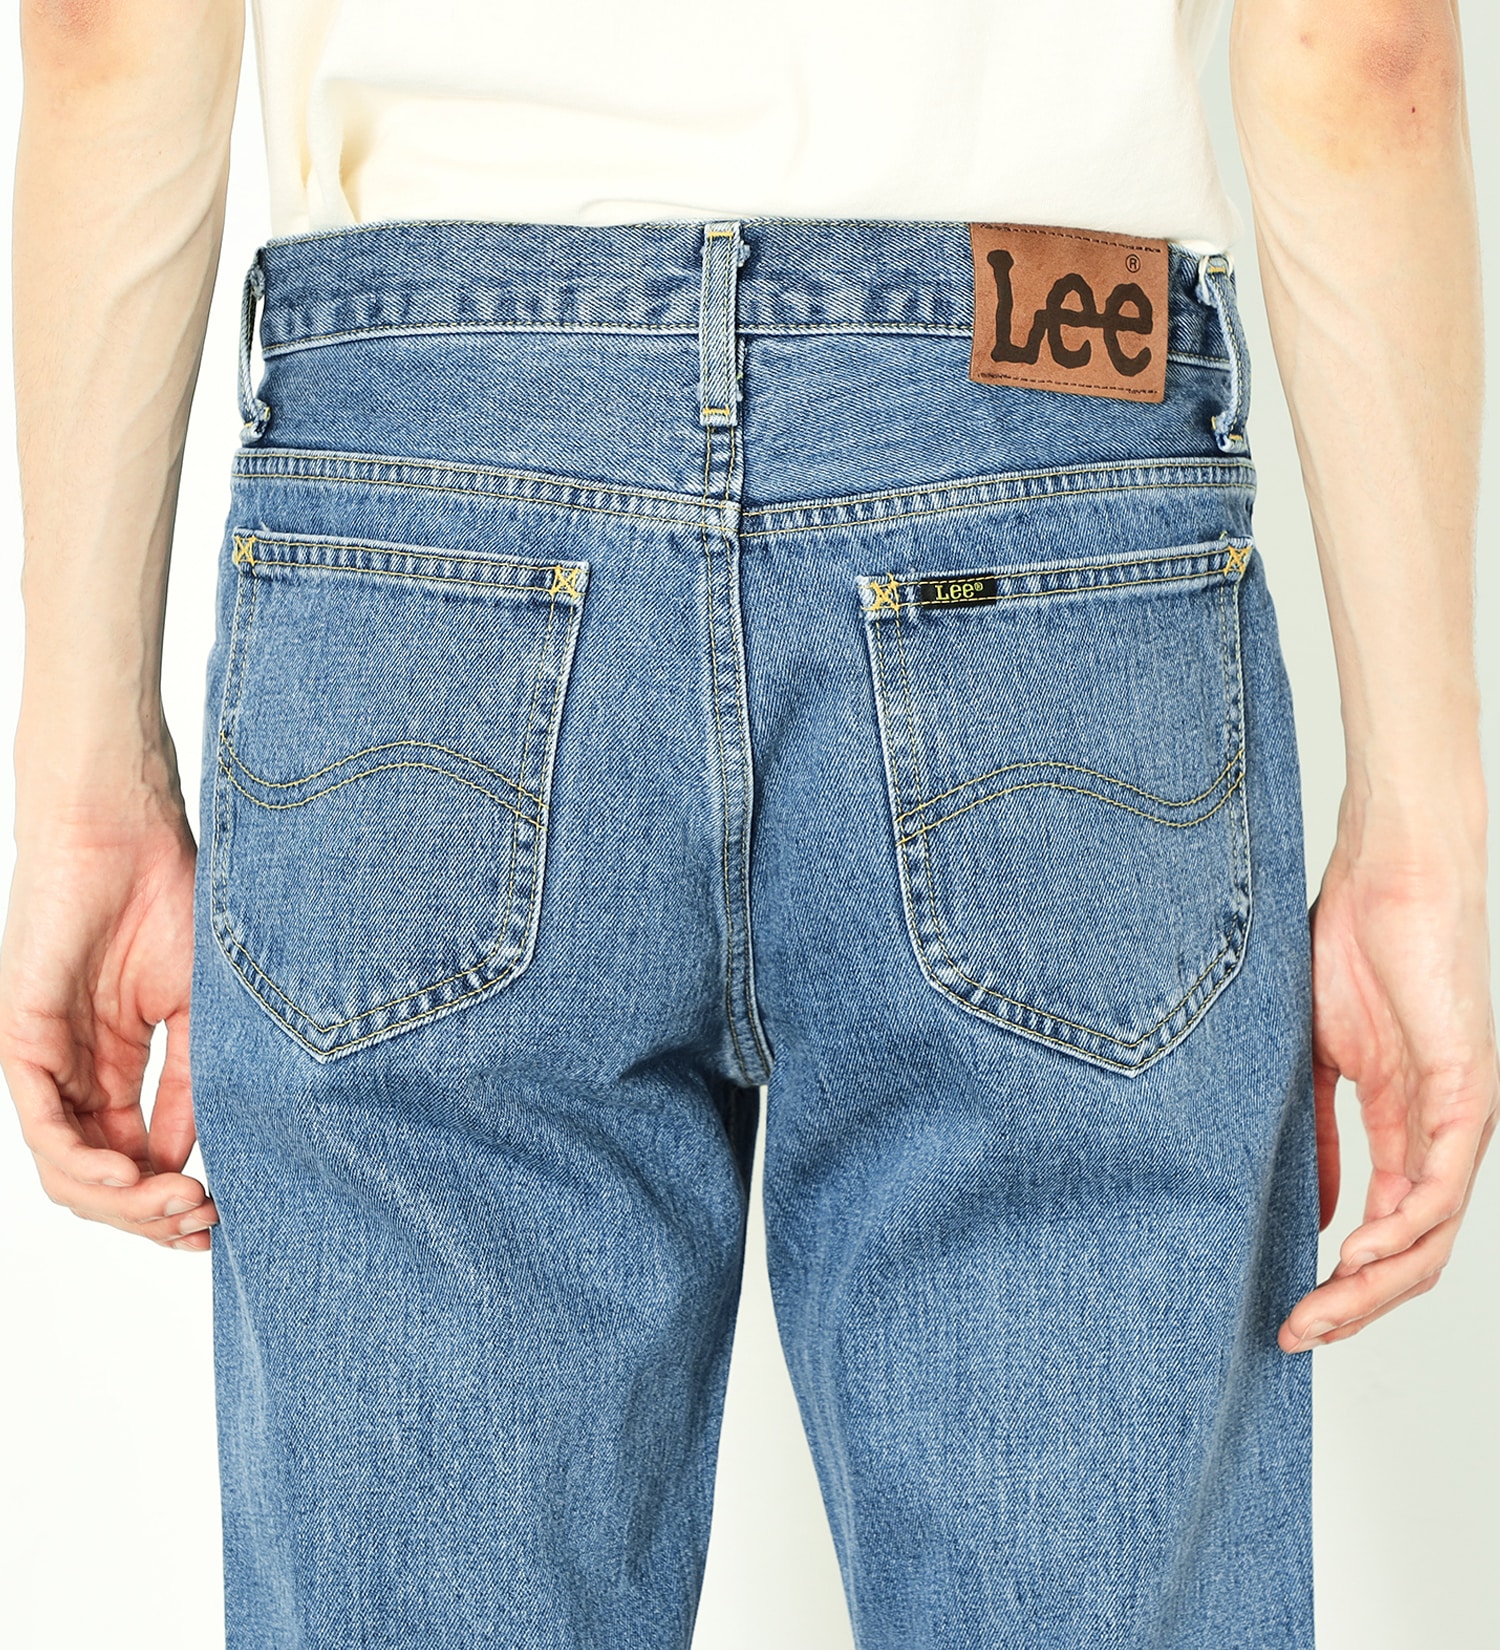 Lee(リー)のAMERICAN STANDARD 102 ブーツカットジーンズ|パンツ/デニムパンツ/メンズ|淡色ブルー